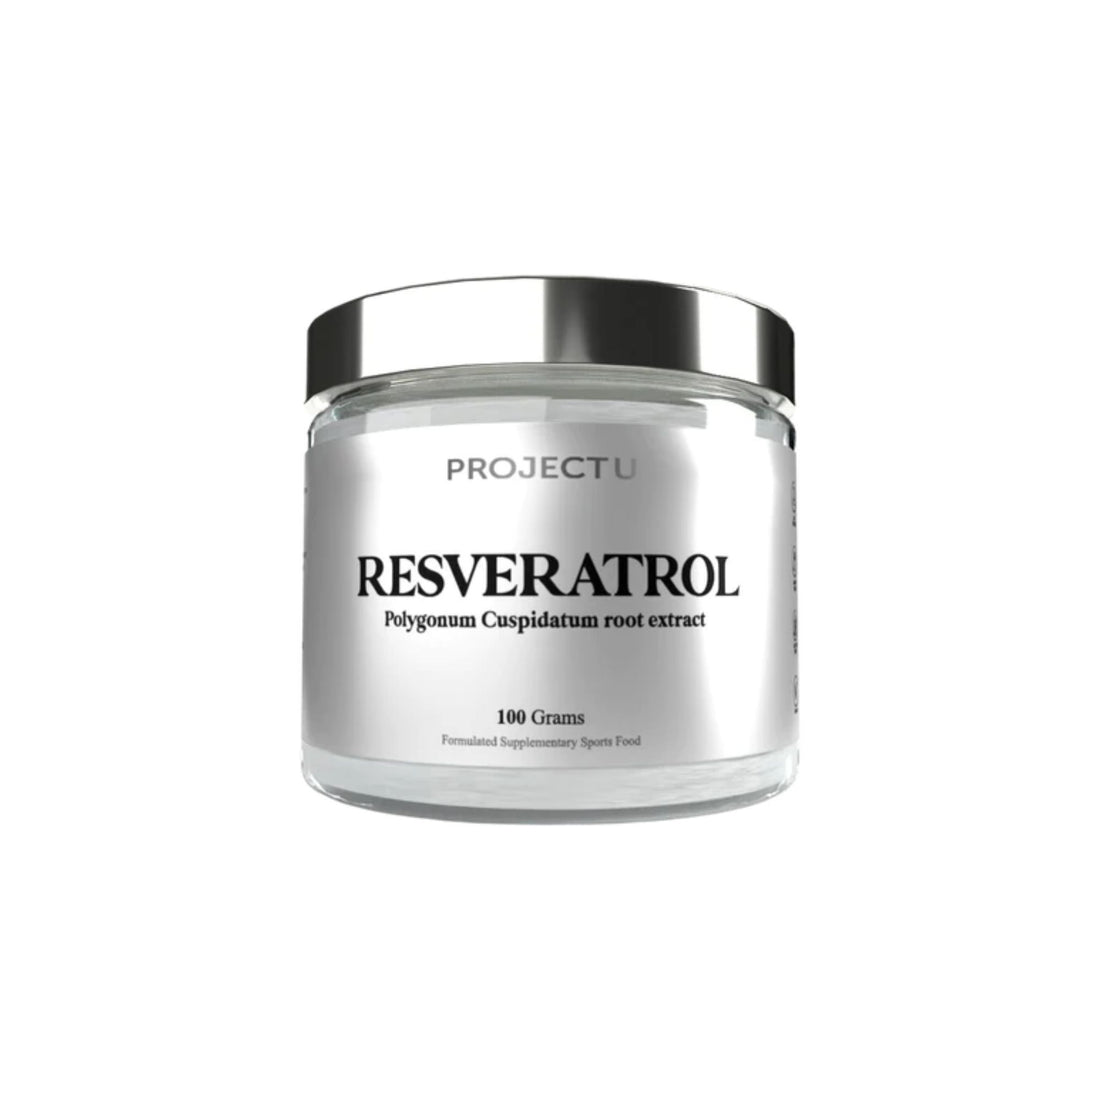 Project U Resveratrol Powder